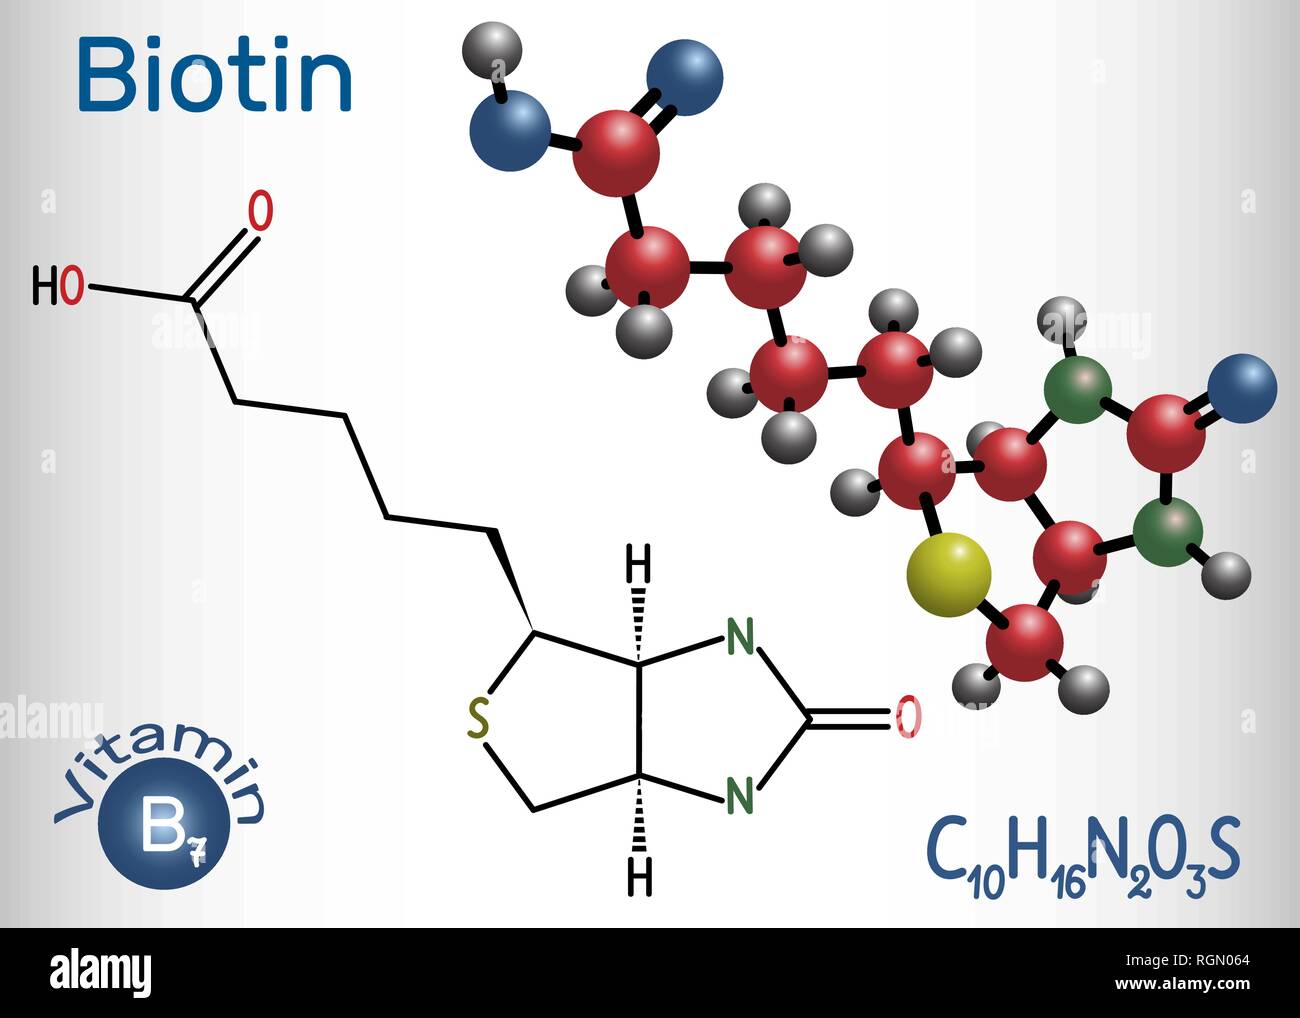 Biotin (vitamin B7). Structural chemical formula and molecule model. Vector illustration Stock Vector